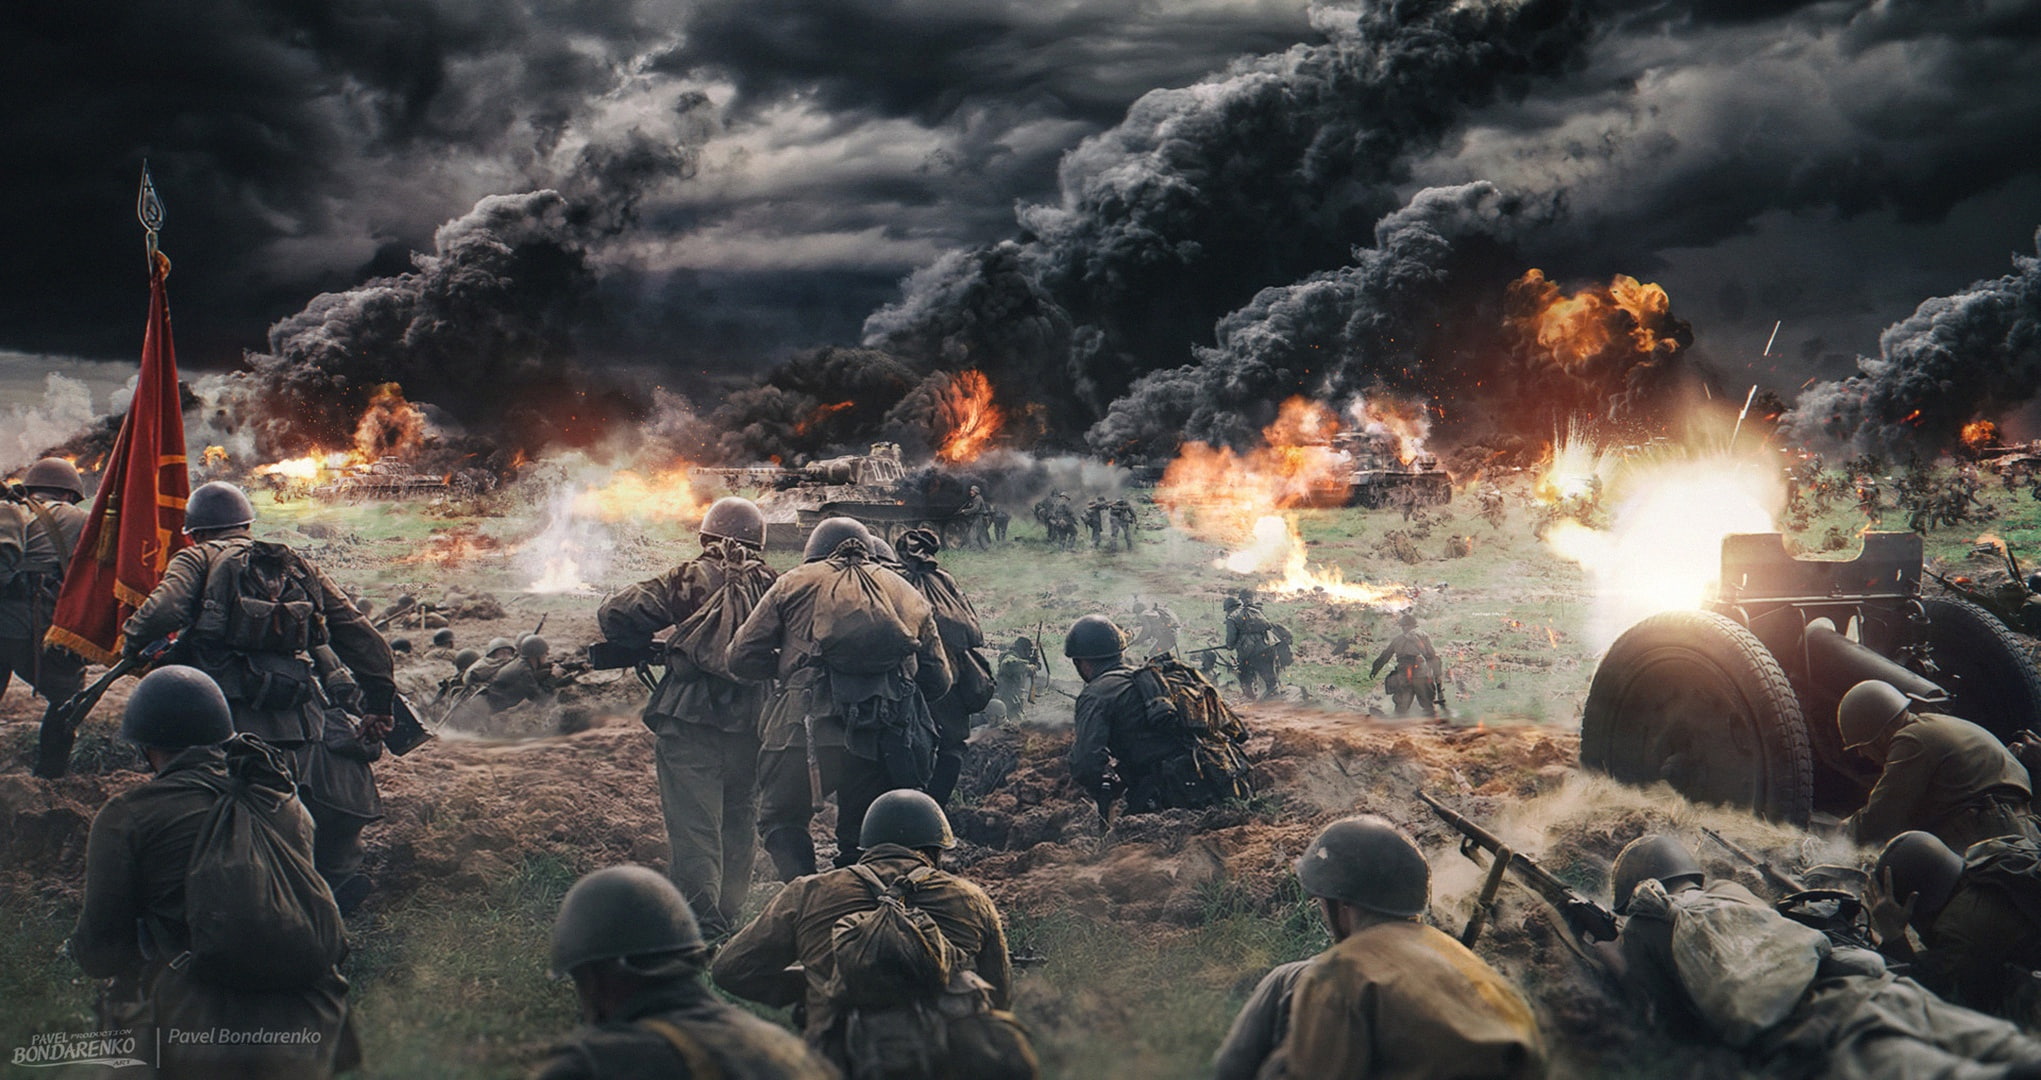 World War II, artwork, Pavel Bondarenko, explosion, group of people